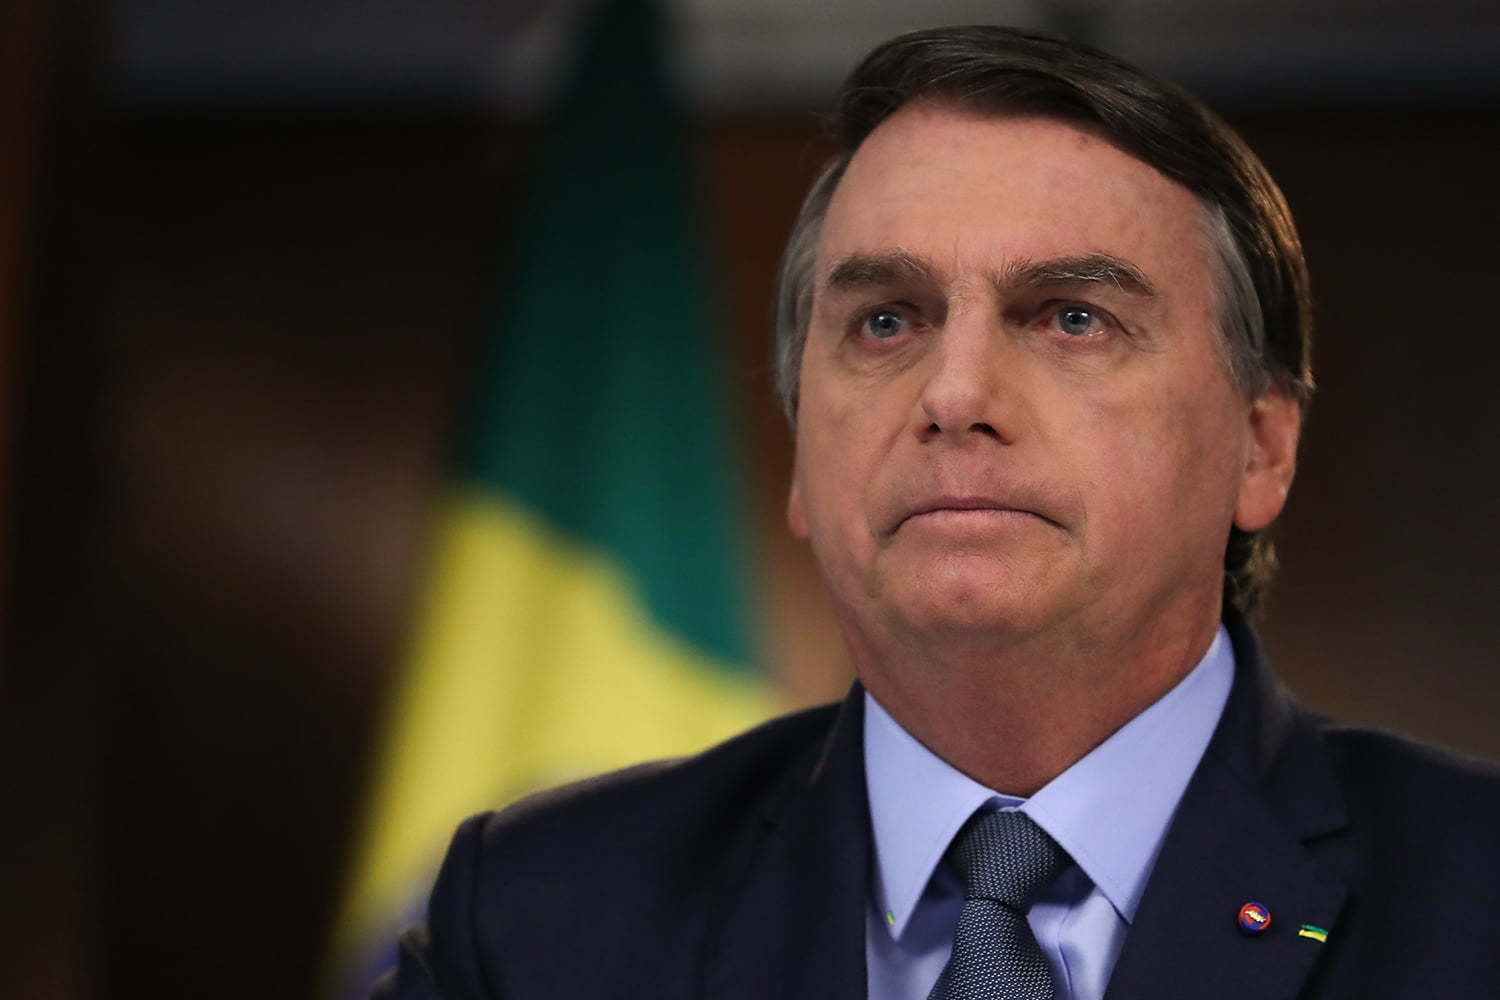 Novo marco da biodiversidade deve considerar crise, diz Bolsonaro